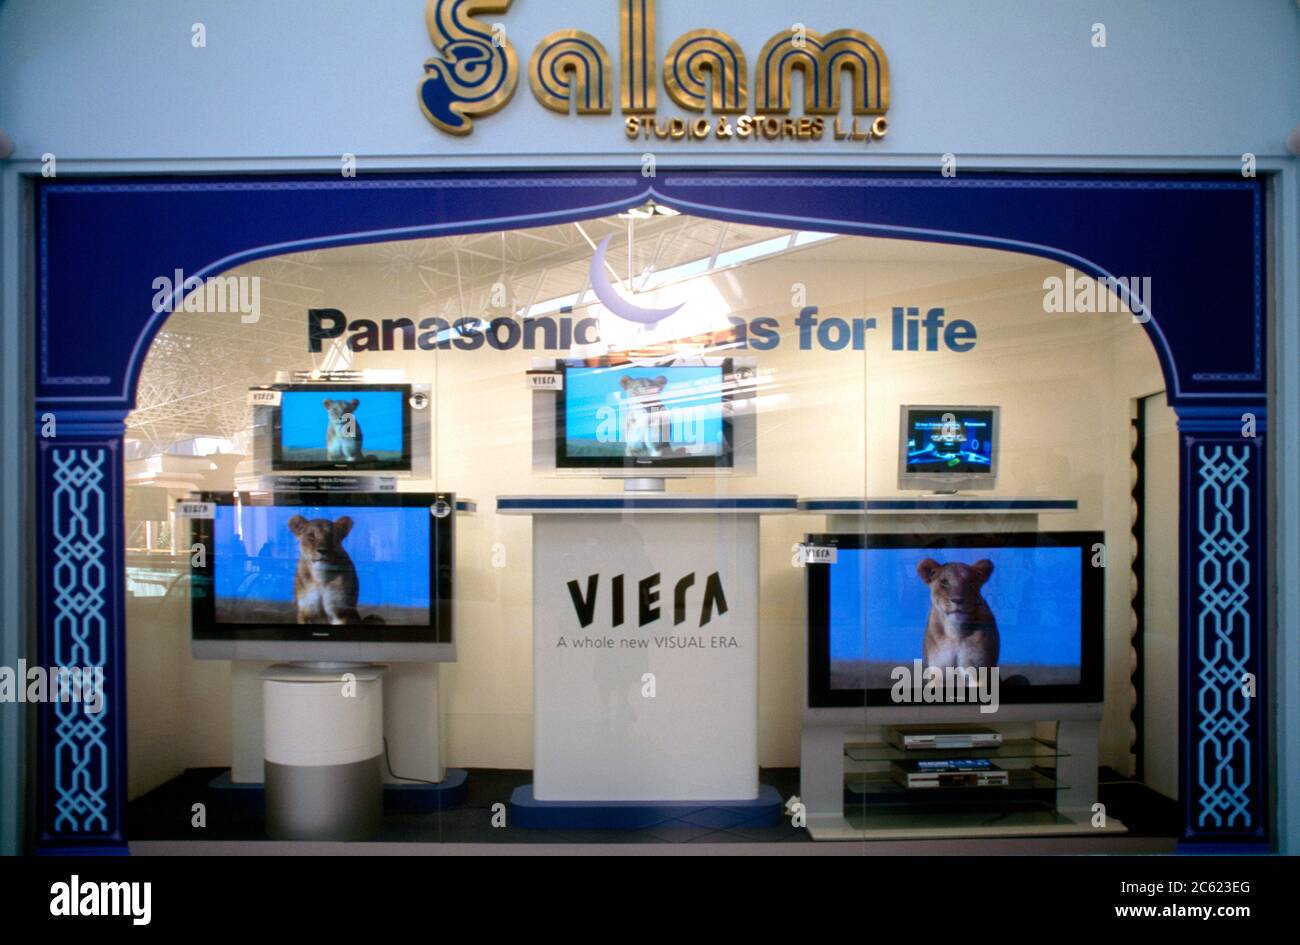 Dubai UAE Wafi Shopping Centre Salem Studio And Stores Panasonic Televisions In Shop Window Stock Photo